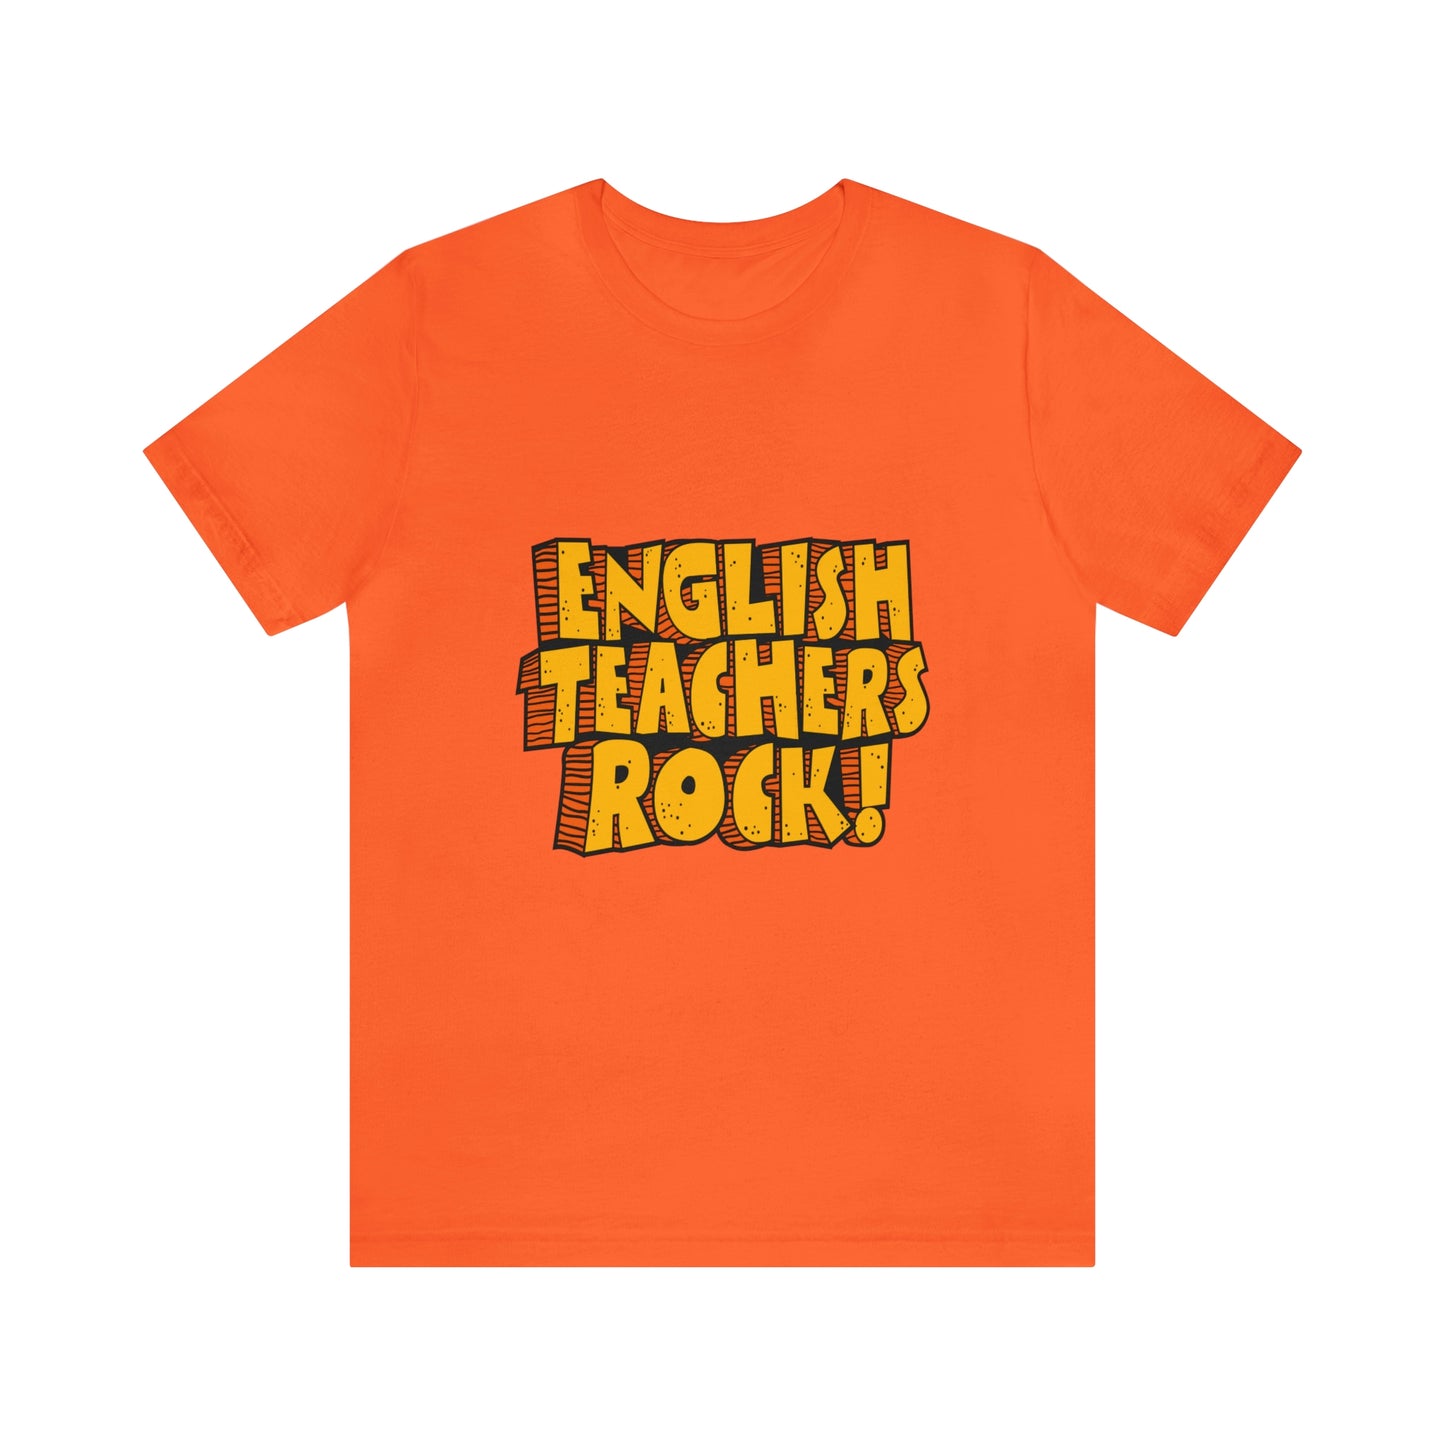 "English Teacher Rocks" Tee